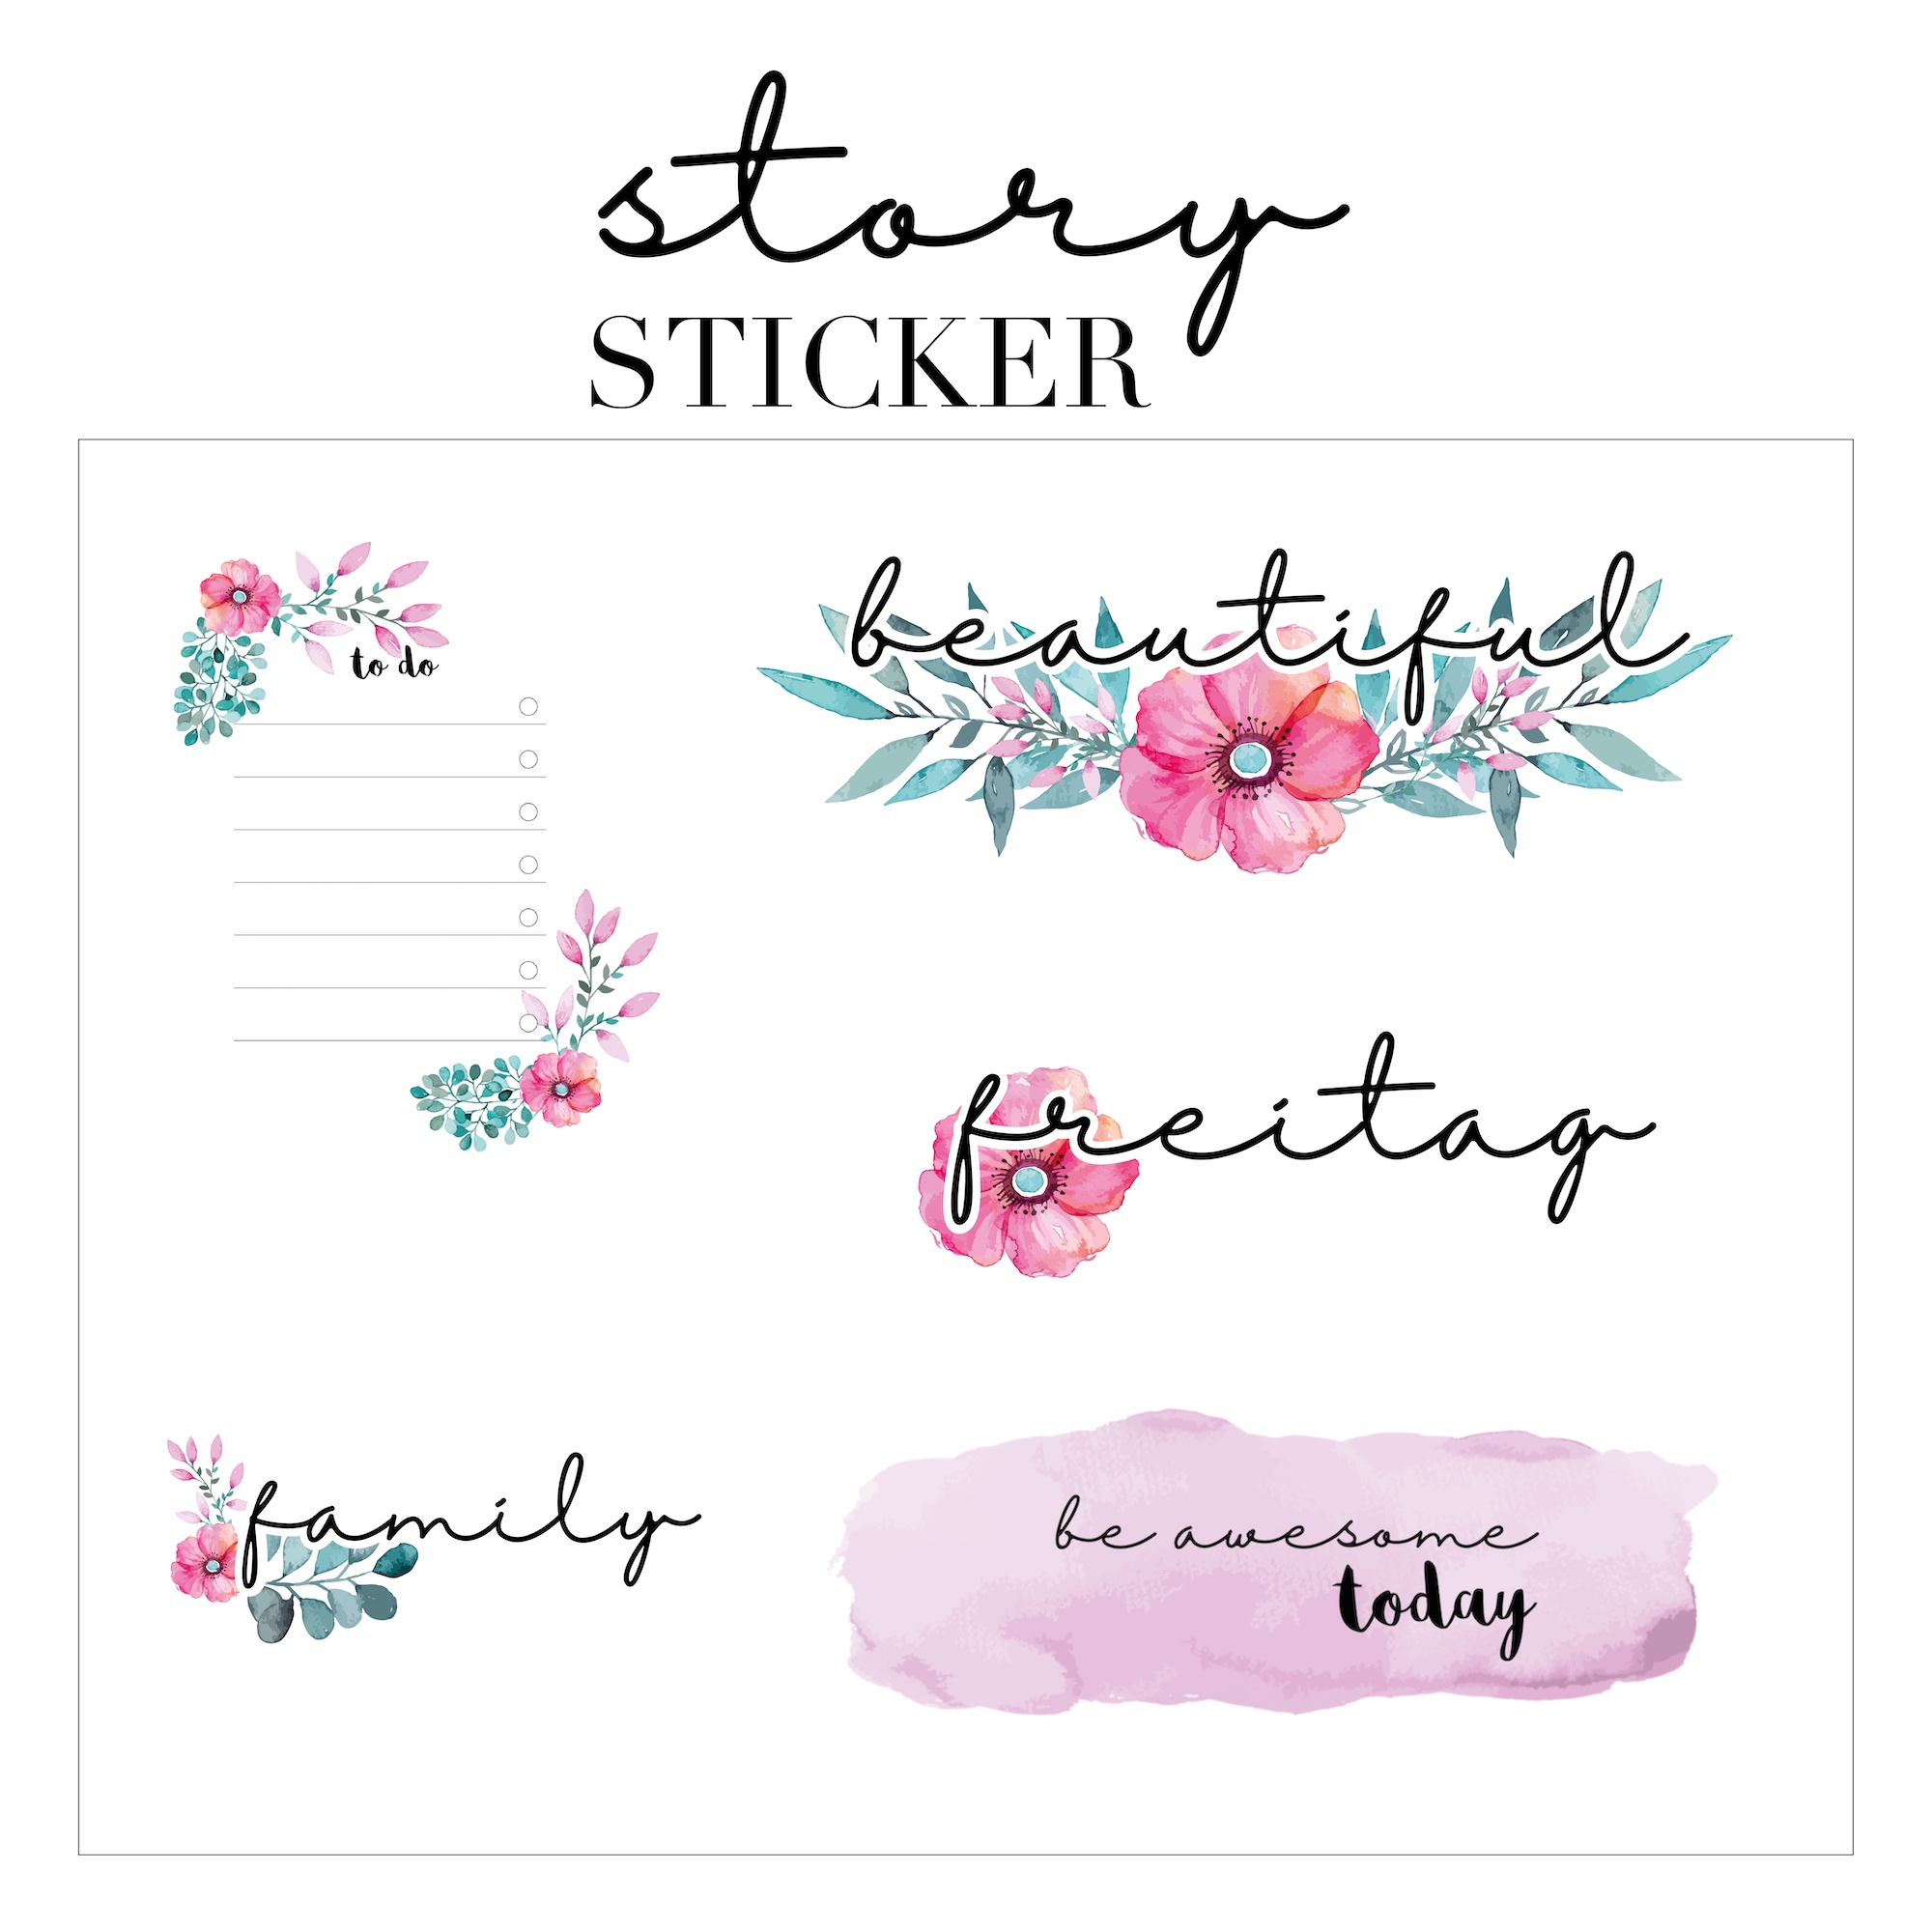  Instagram  Story  Sticker  FLOWER POWER halloBliss